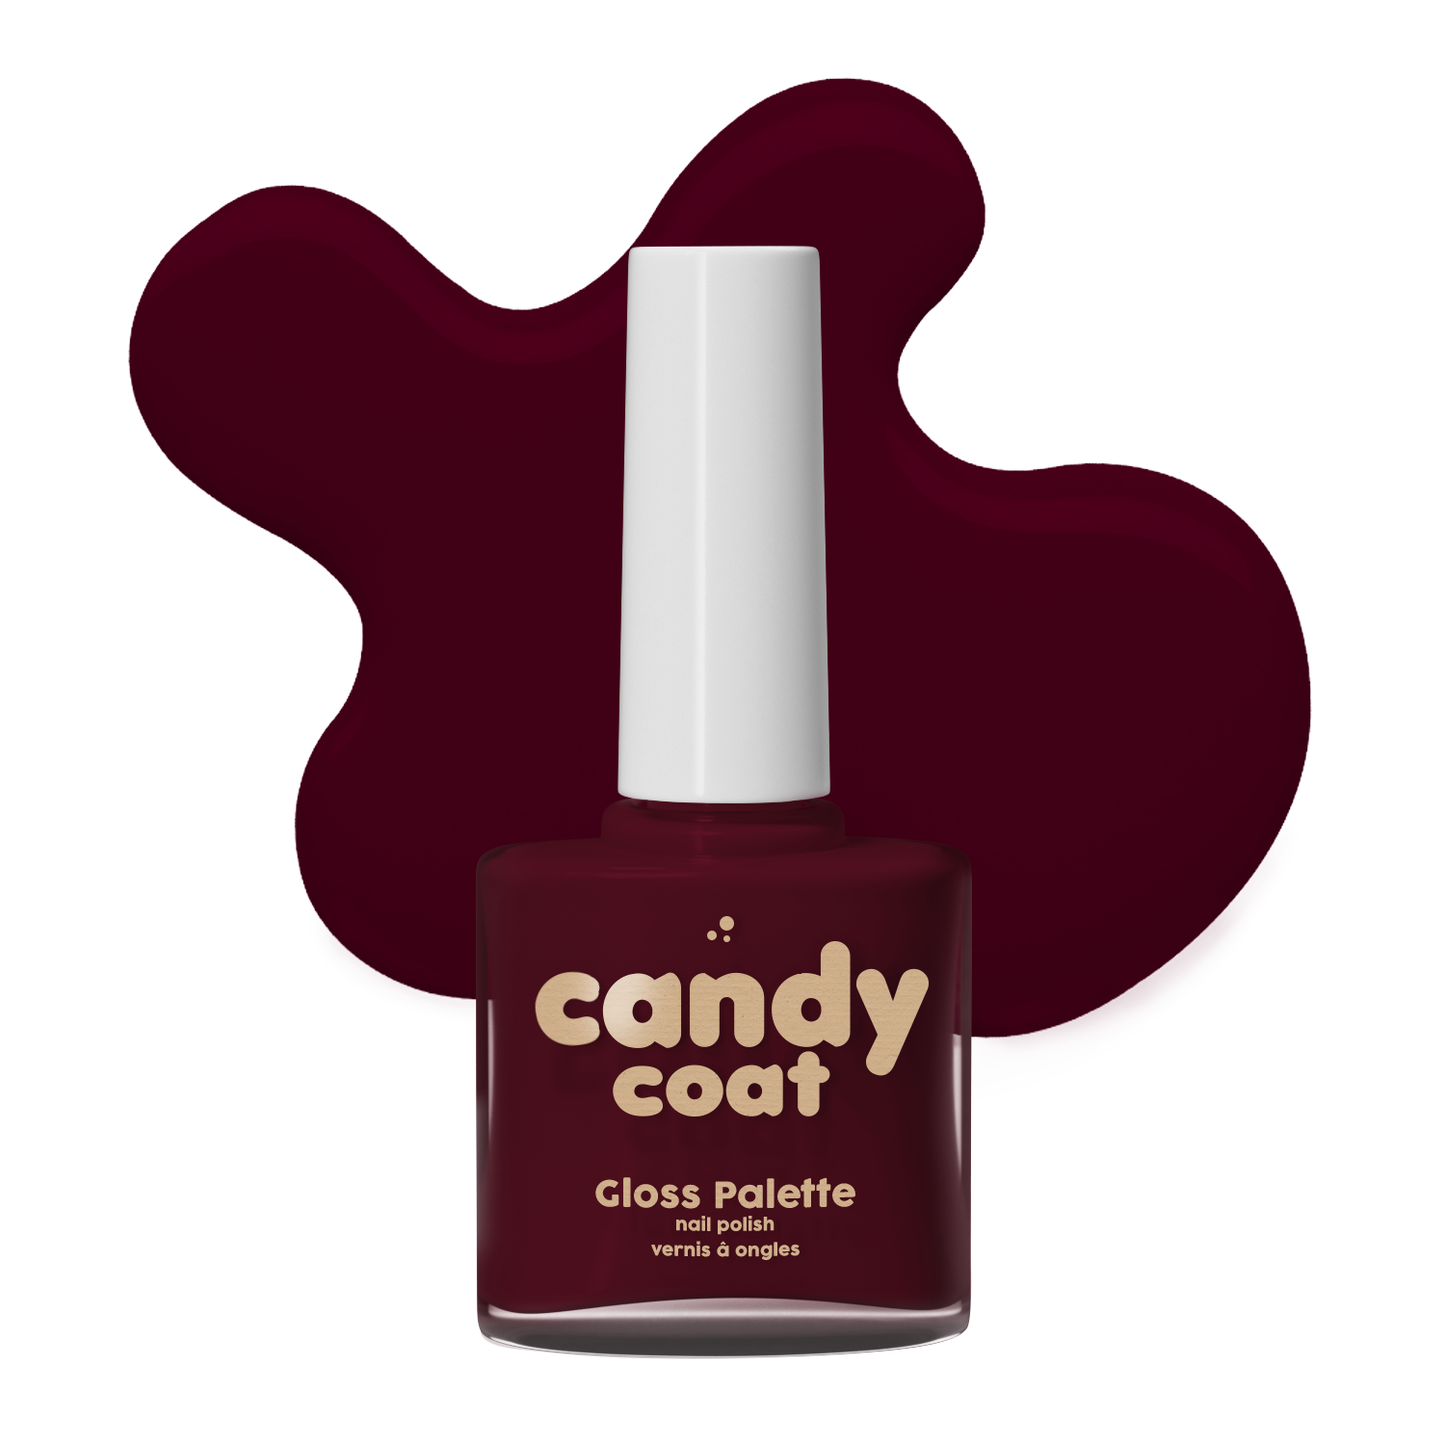 Candy Coat GLOSS Palette - Yana - Nº 174 - Candy Coat